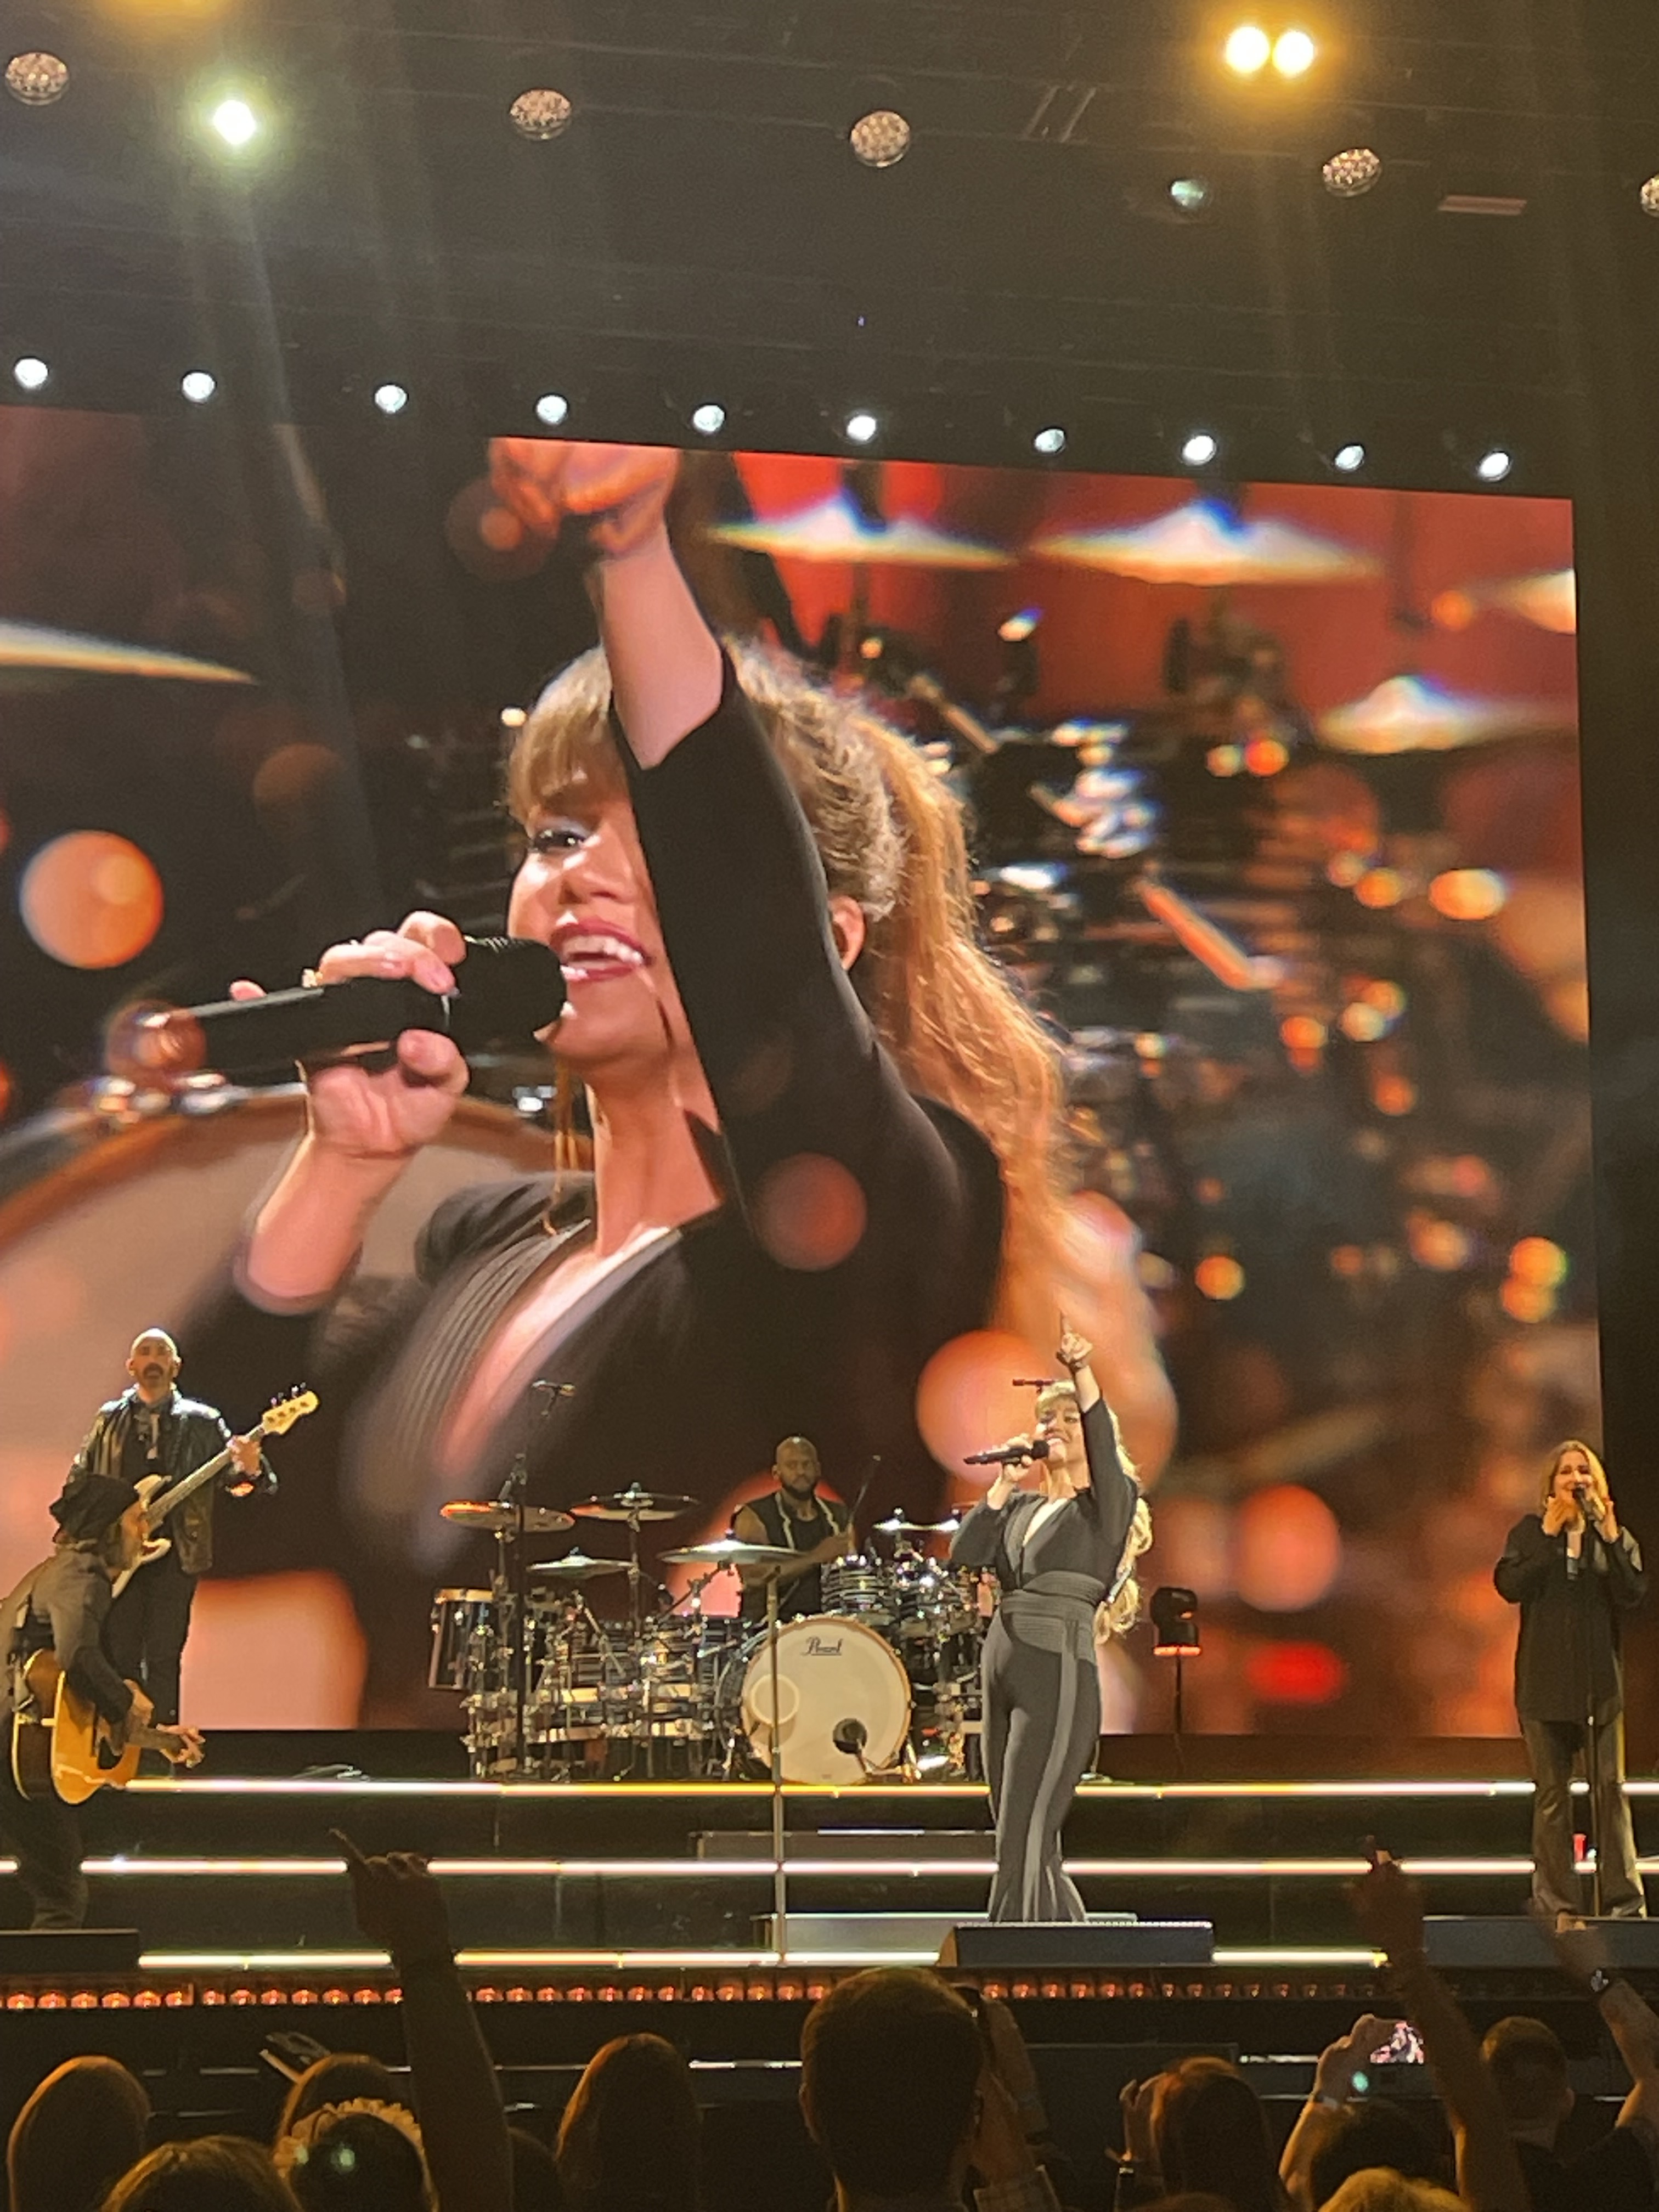 Kelly performed at Hard Rock Live at Etess Arena in Atlantic City on May 10 and May 11